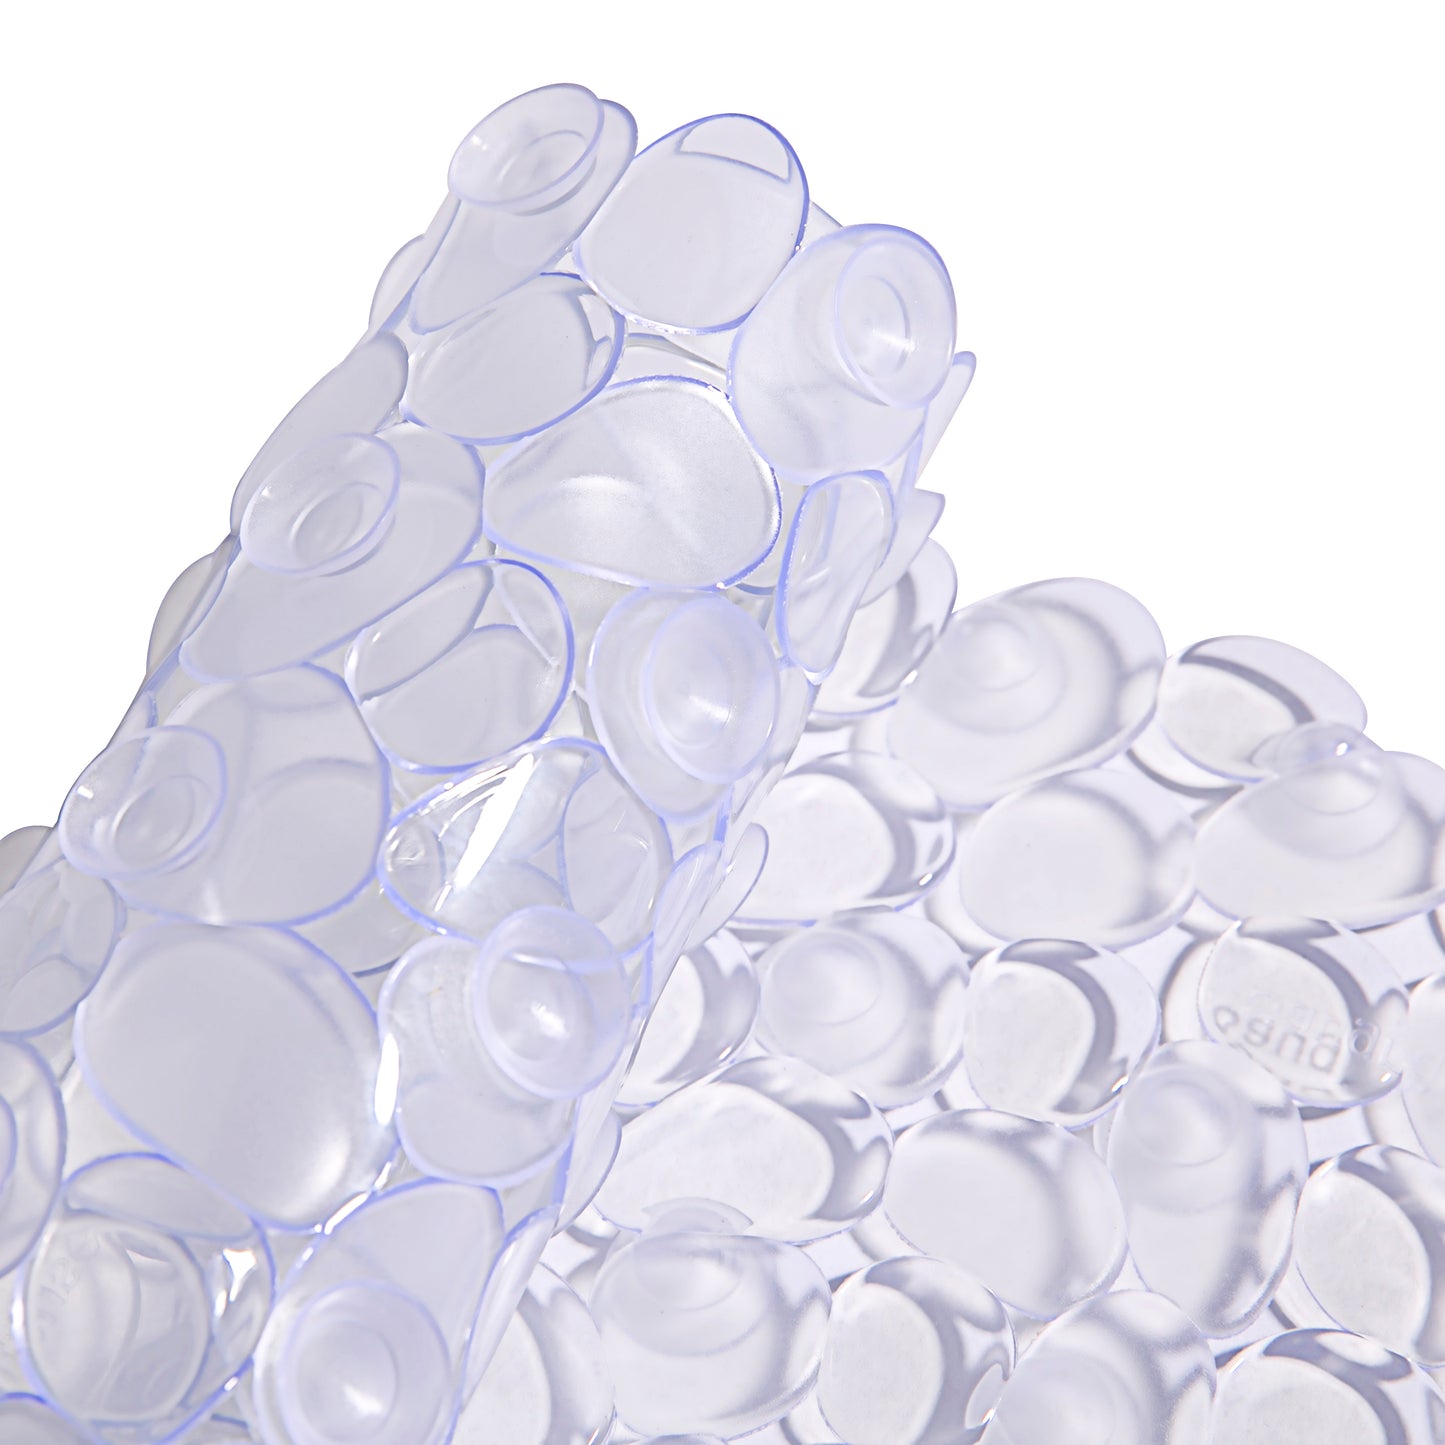 Anti Slip Bath Mat - Rectangle Pebbles Clear